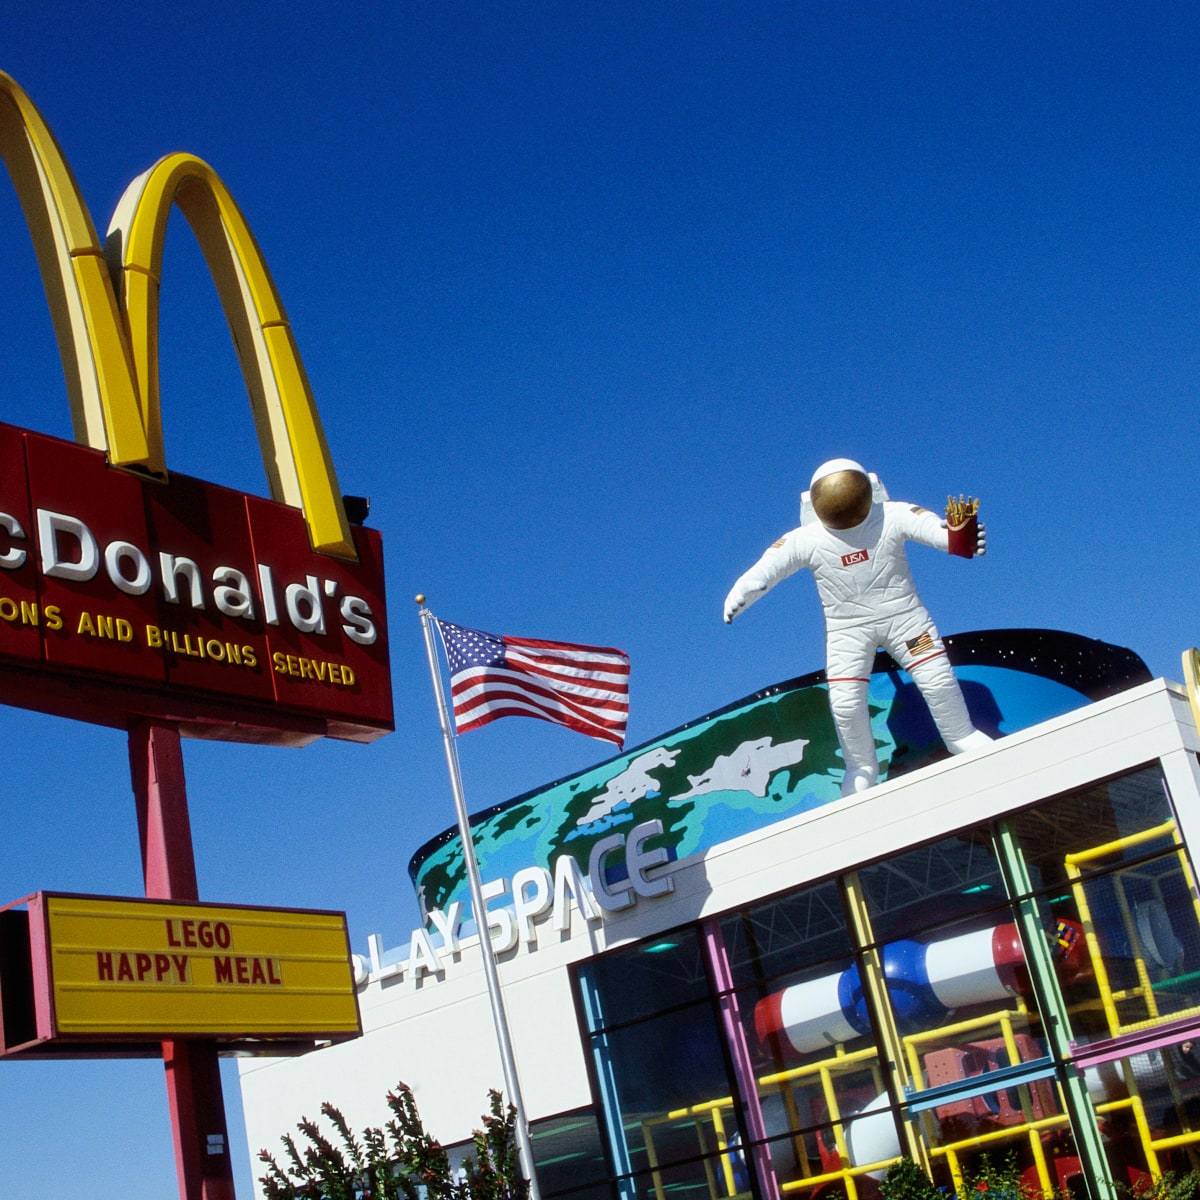 McDonald's Opens New Apple Store Restaurant